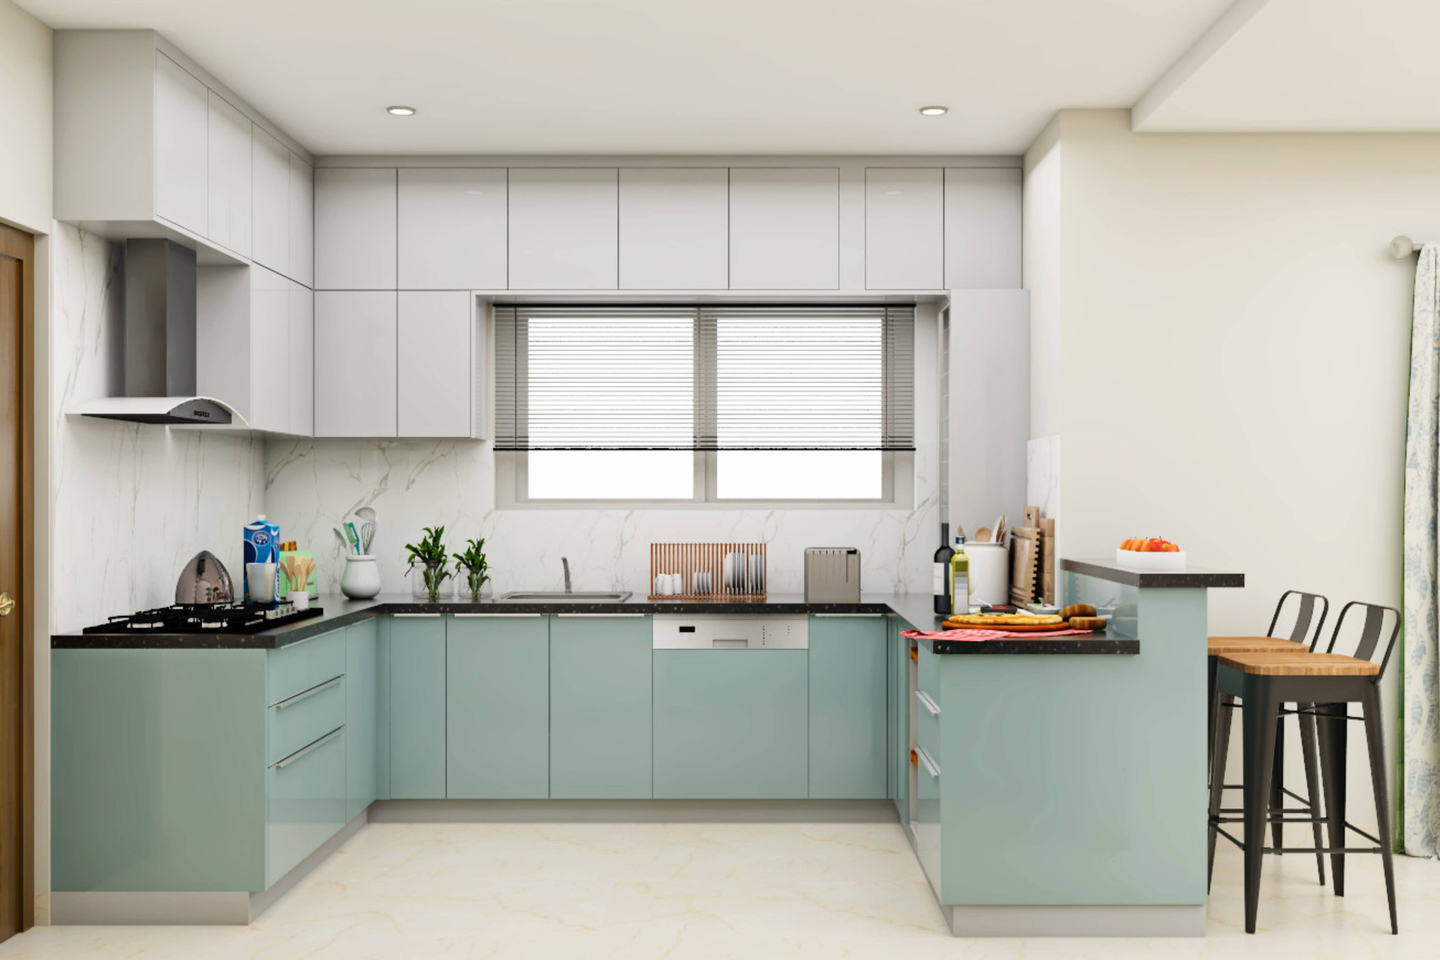 Pale Blue And White Kitchen Design - Livspace